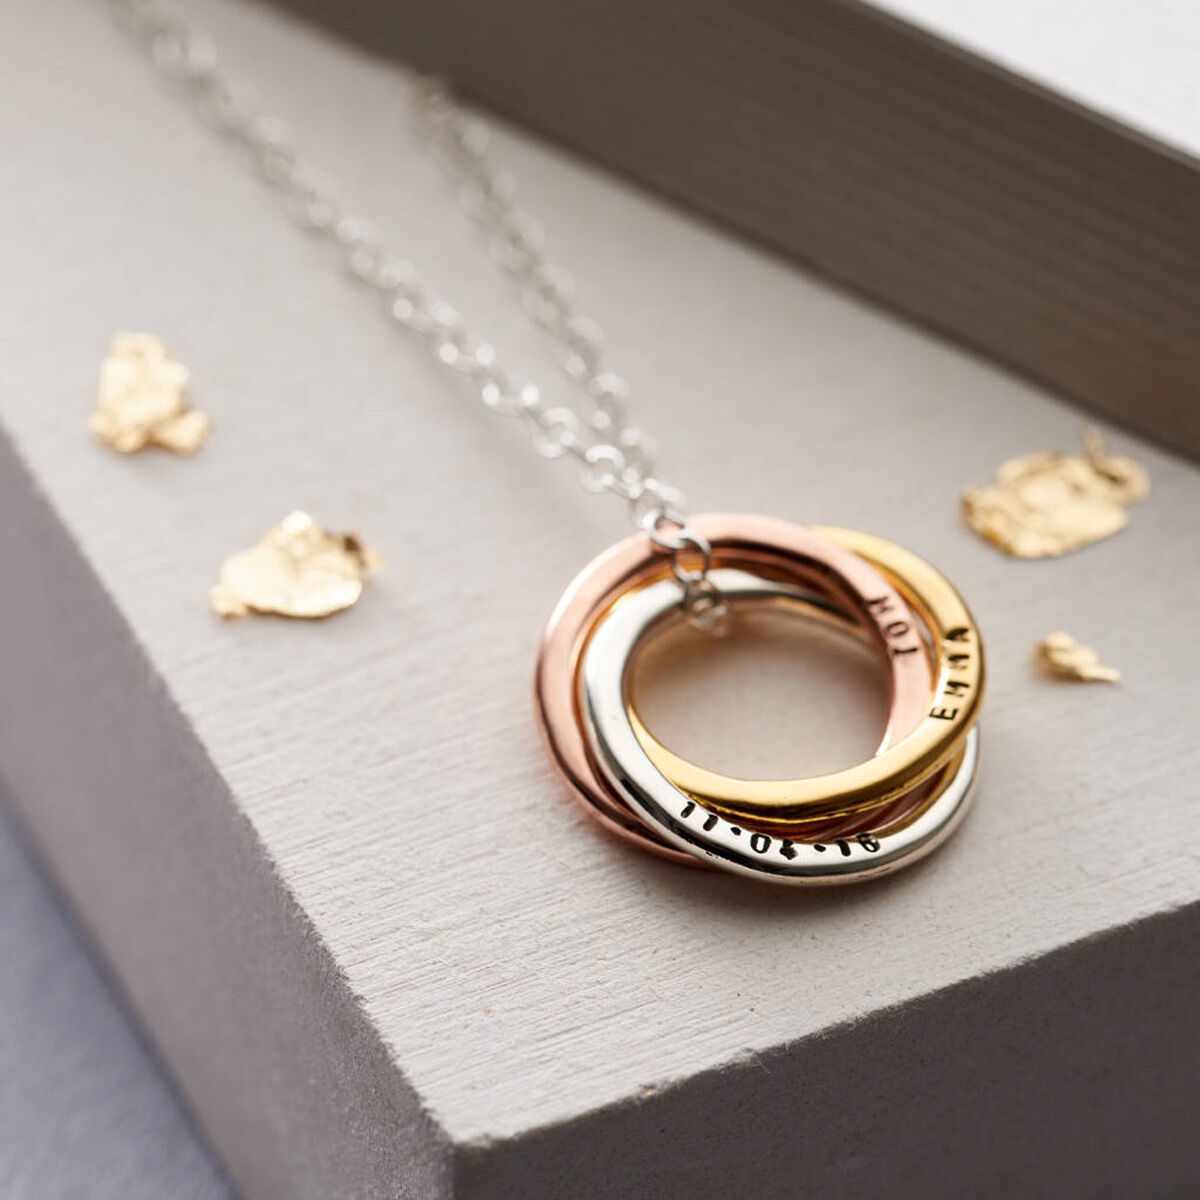 GENUINE PANDORA SPARKLING Heart Floating Locket Ring Size 50 💕S925 ALE  £70.00 - PicClick UK